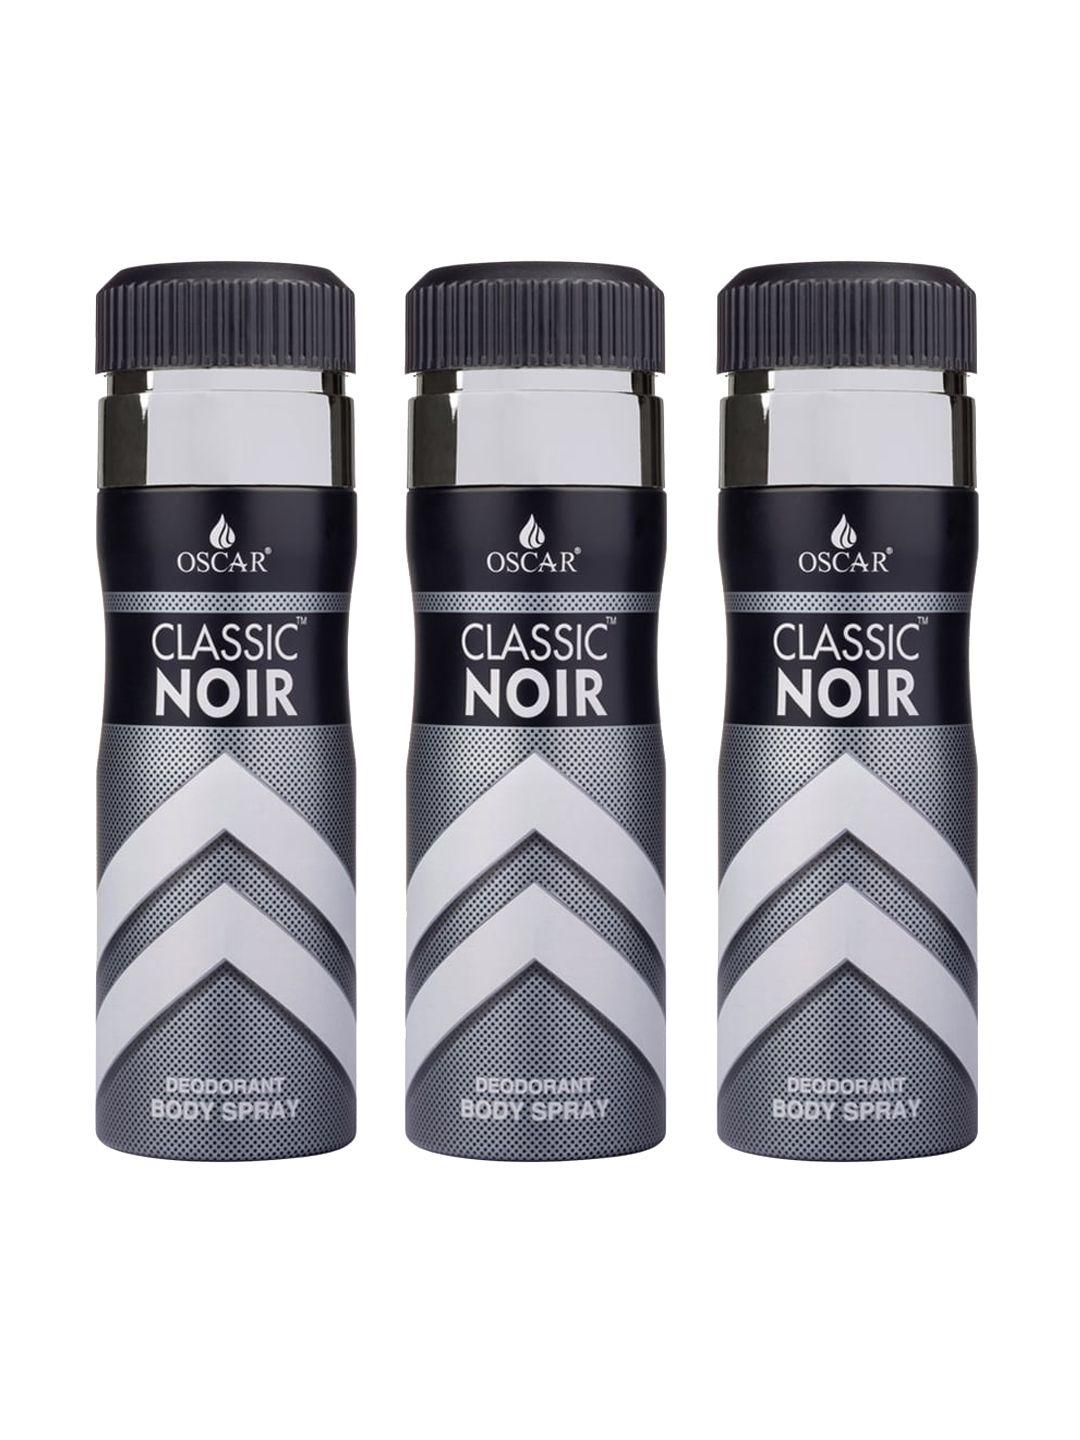 oscar set of 3 classic noir oriental smell deodorant body spray - 200 ml each